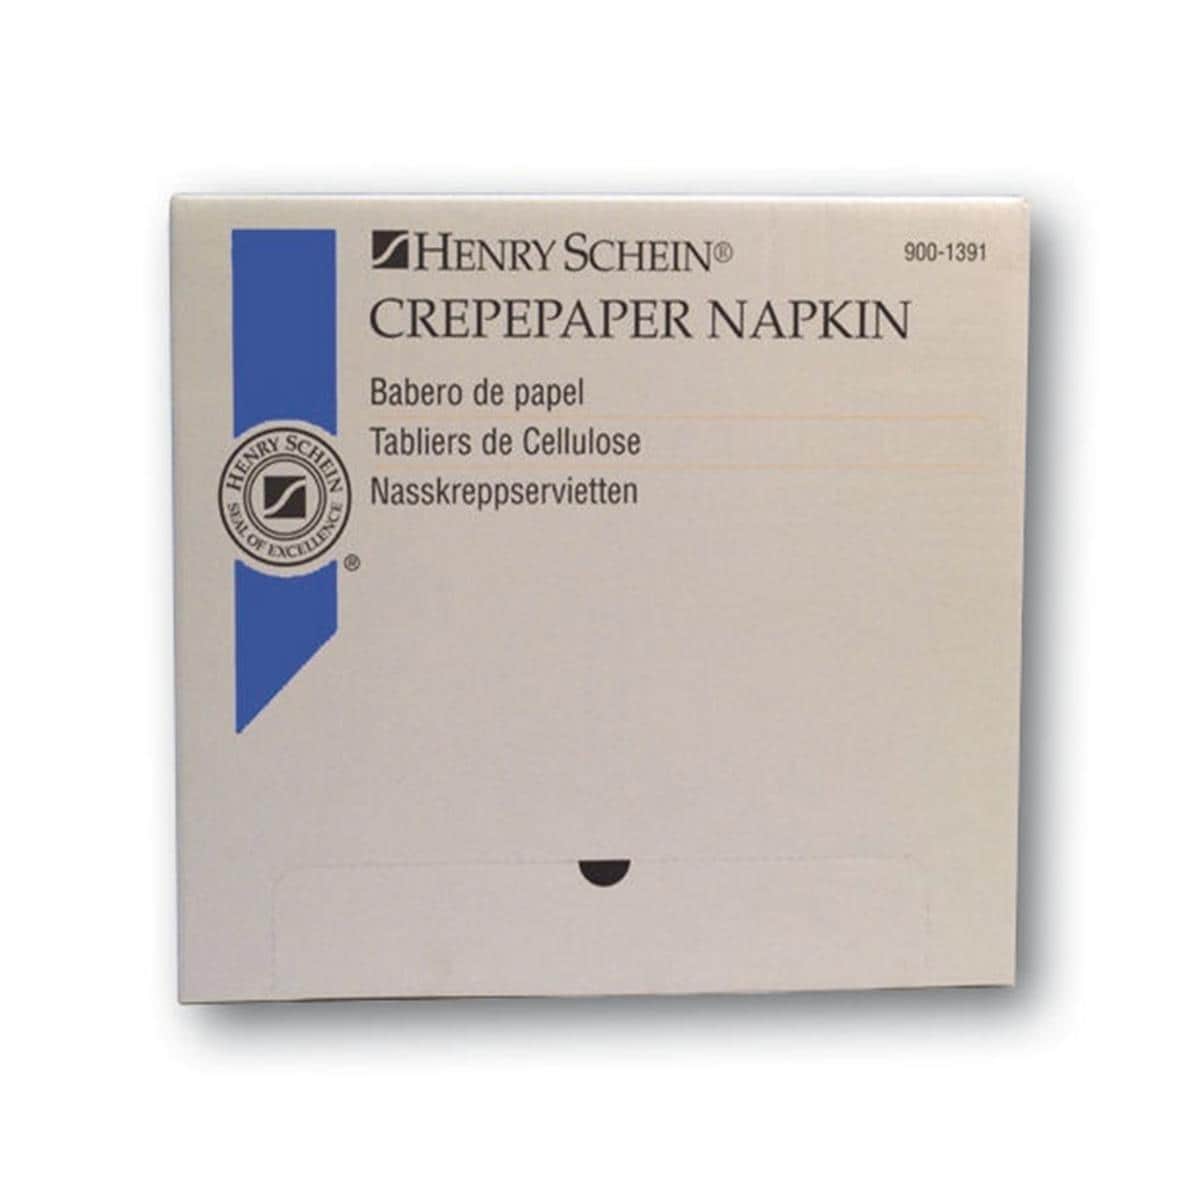 Crepepaper Napkin - Per doos, 1000 stuks